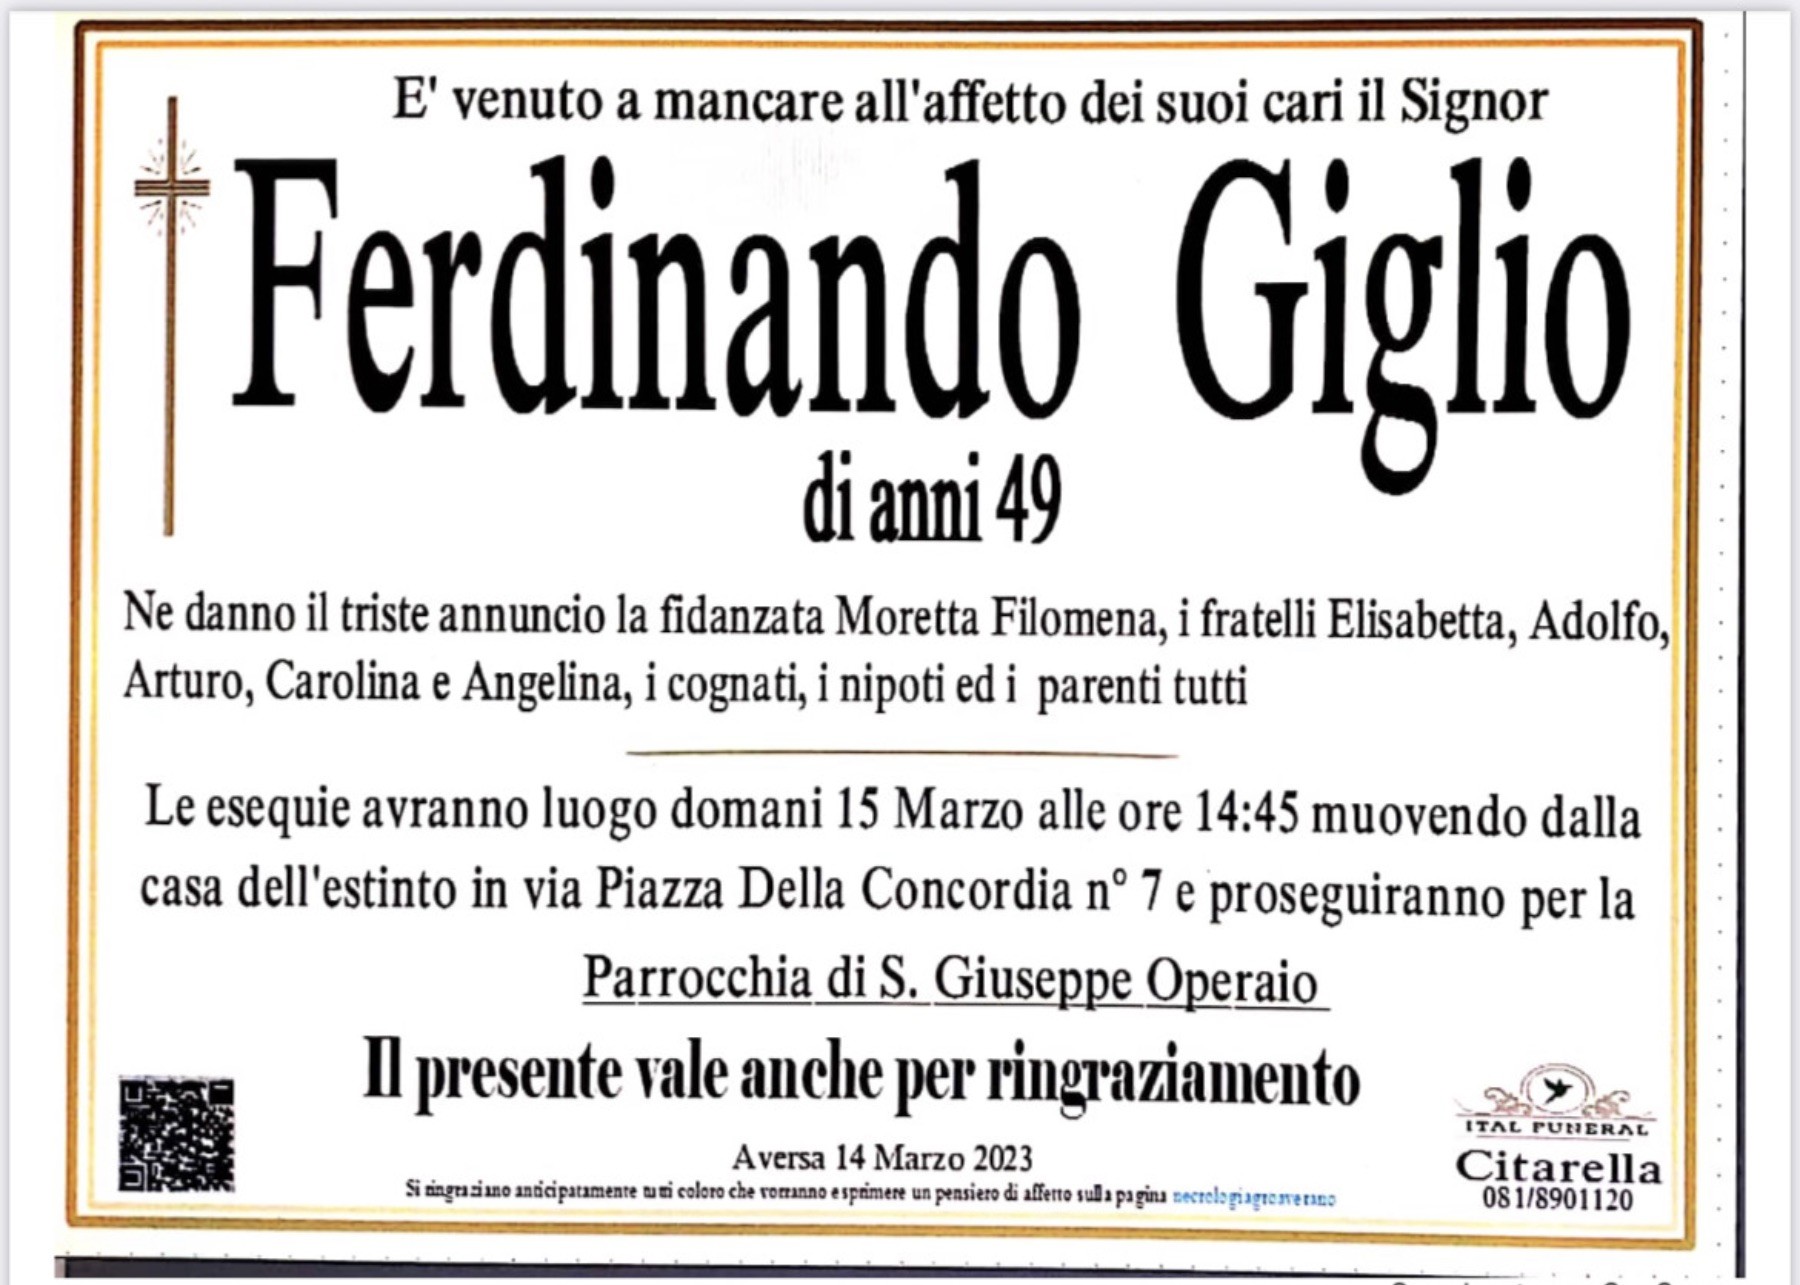 Ferdinando Giglio